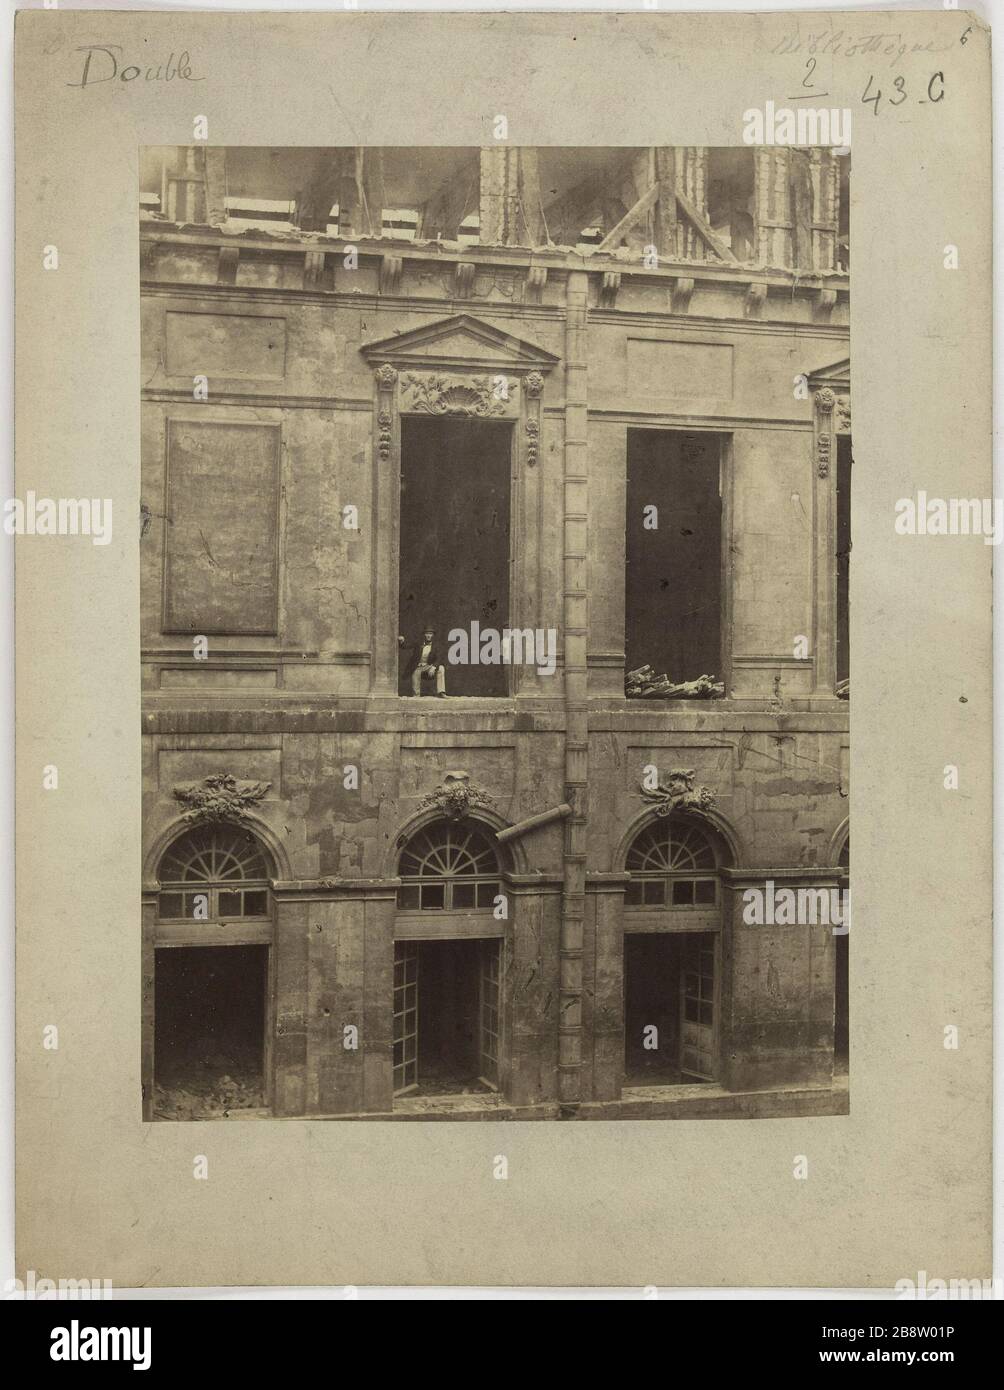 Library. View of a building in ruins, national library [?] Bibliothèque nationale en ruine, Paris (IIème arr.). Photographie anonyme. Paris, musée Carnavalet. Stock Photo